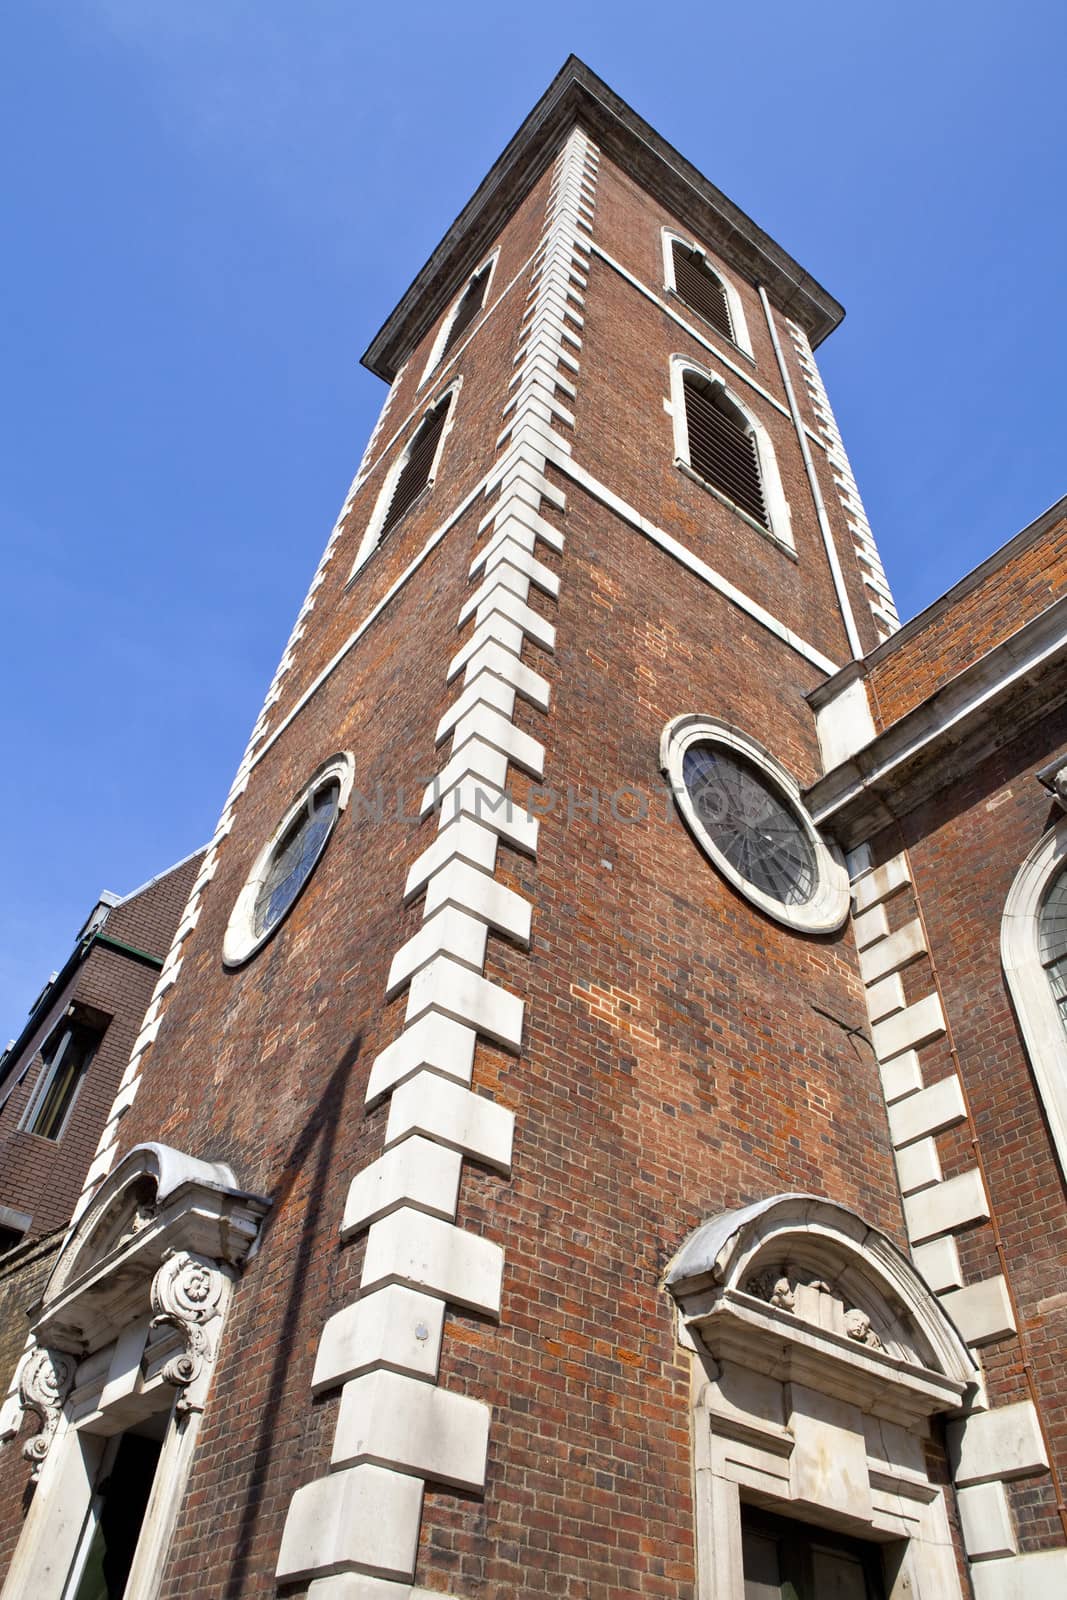 St. Thomas' Church in London by chrisdorney